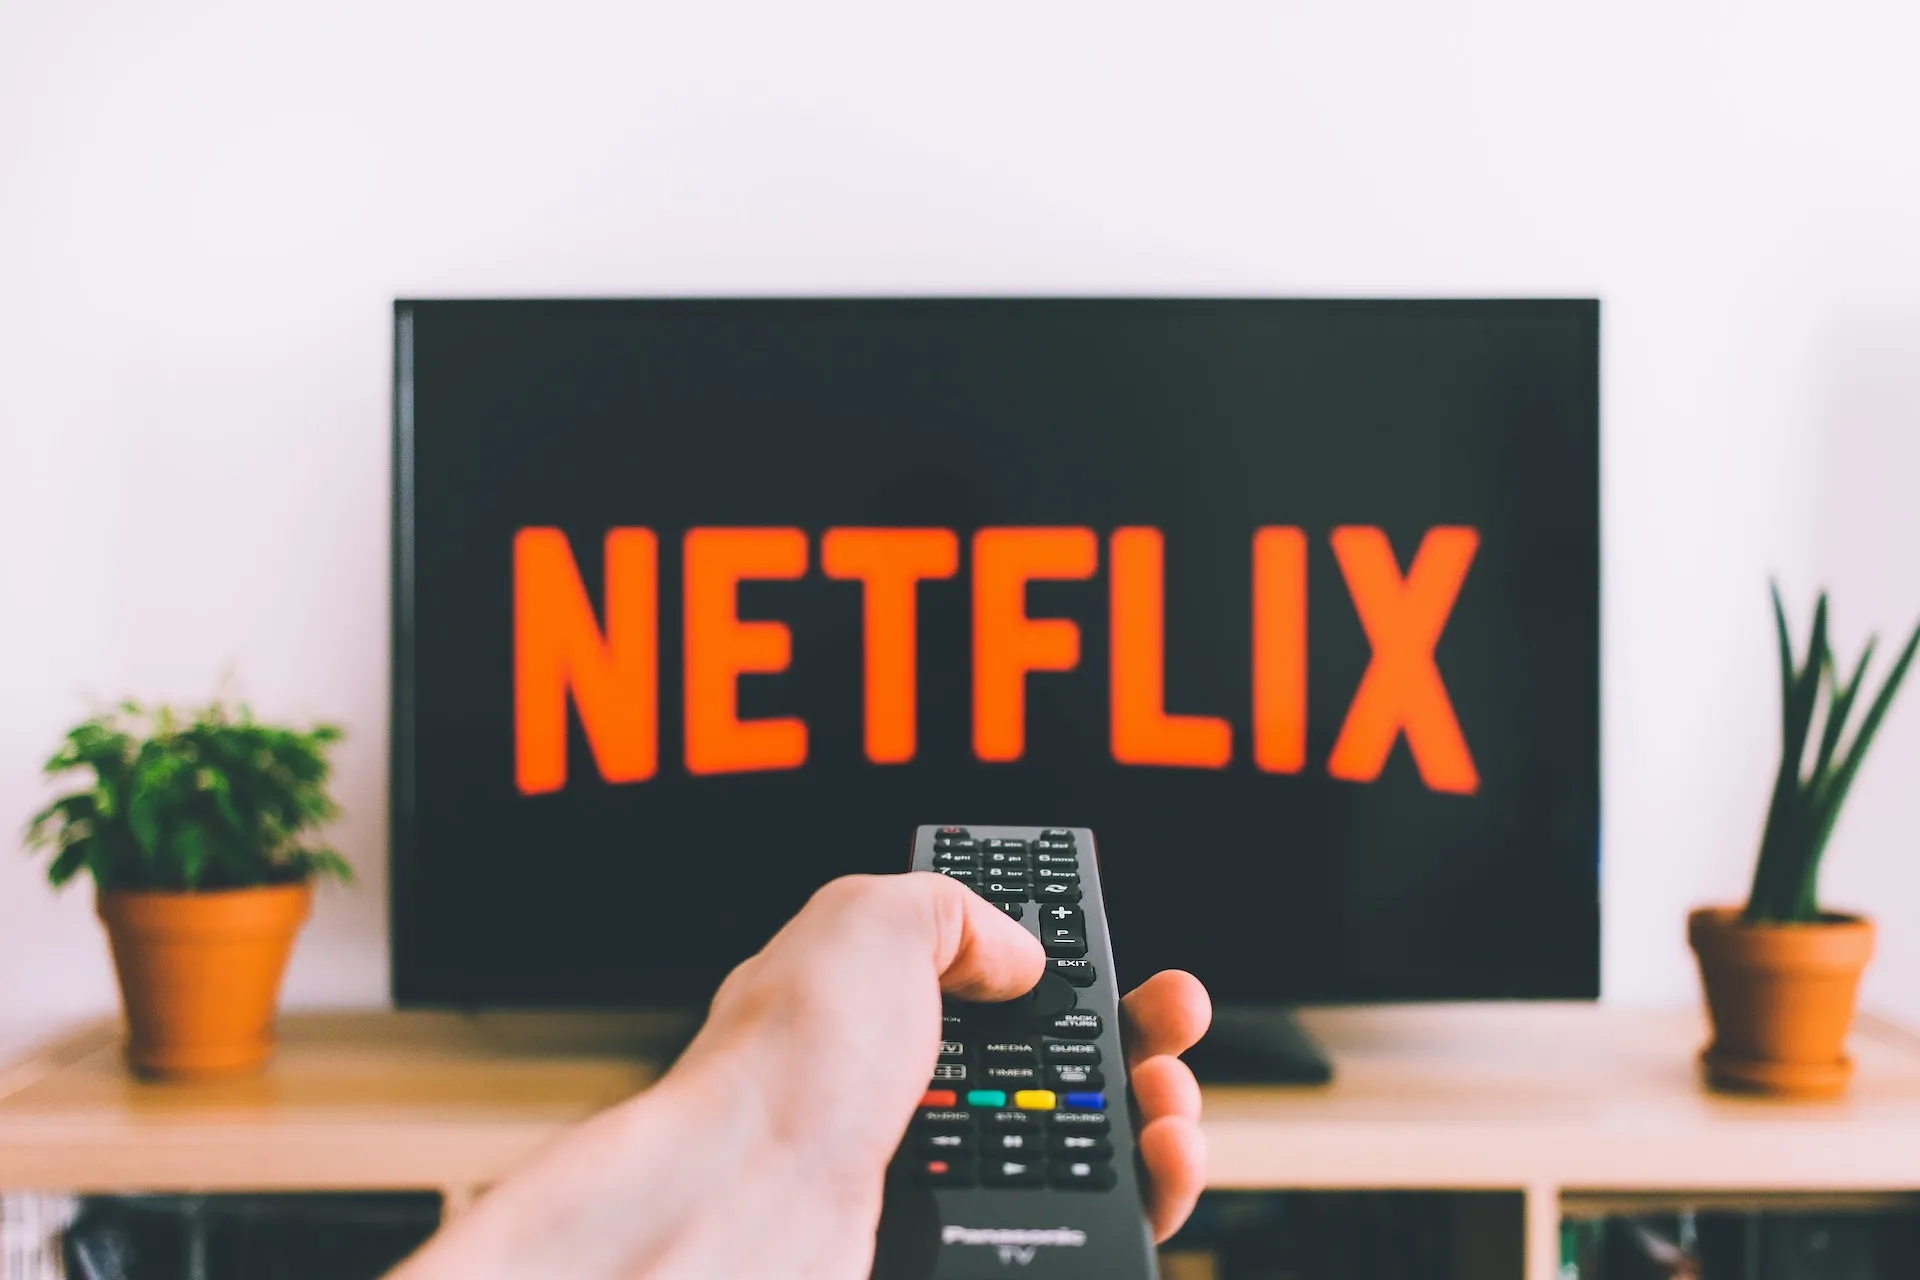 Netflix trasmetterà in diretta i SAG Awards a partire dal 2024